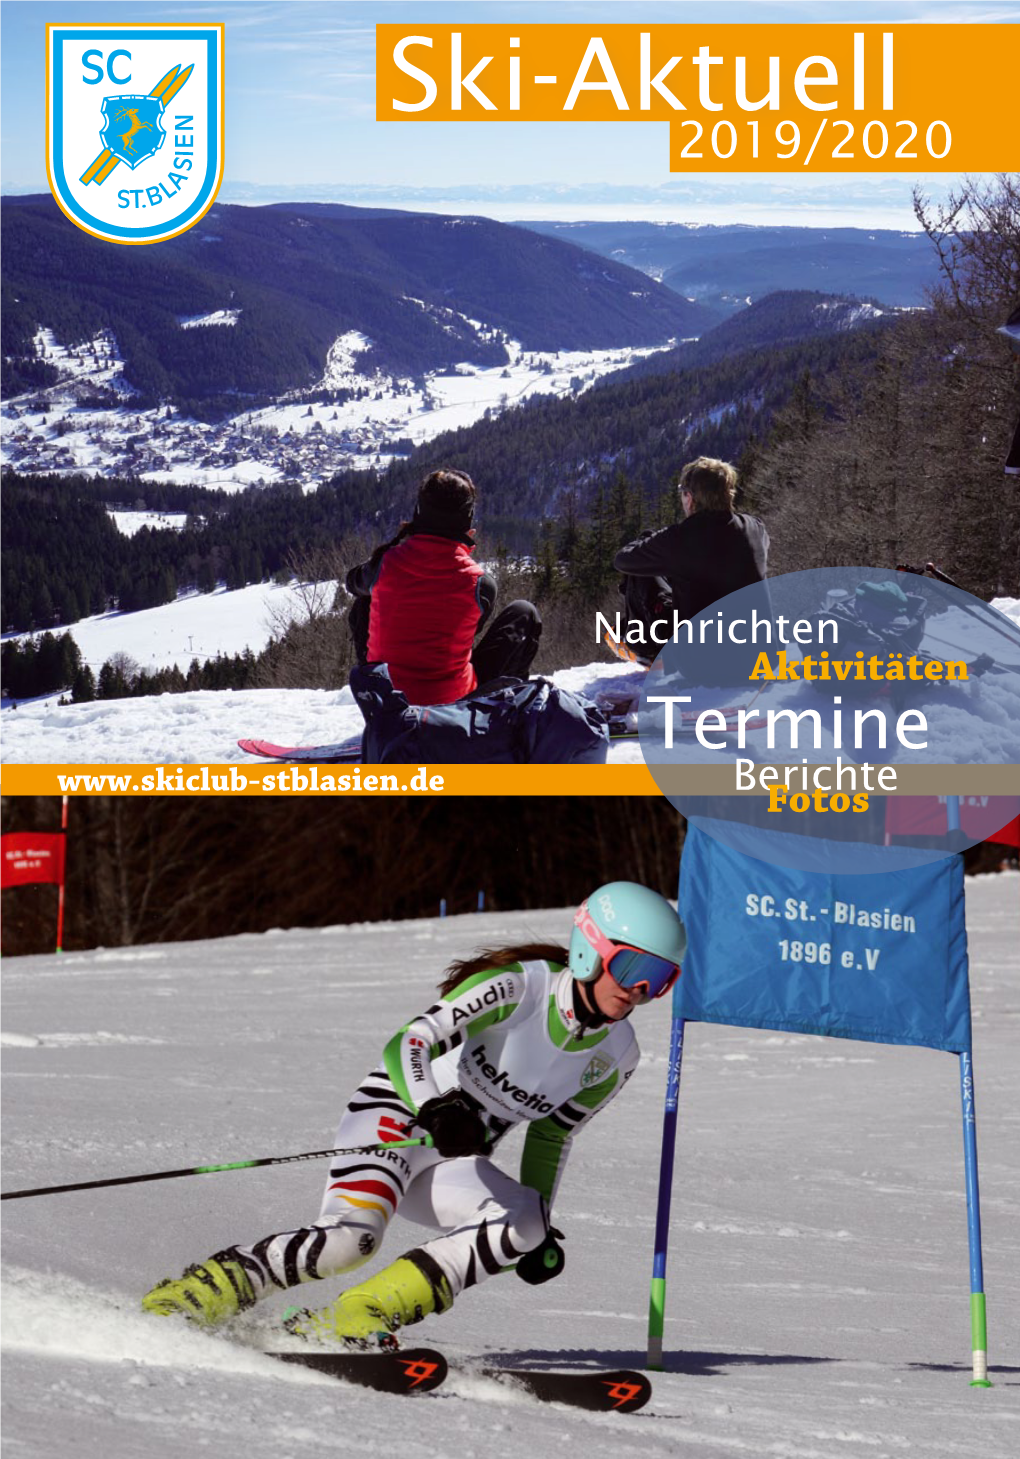 Ski-Aktuell 2019/2020